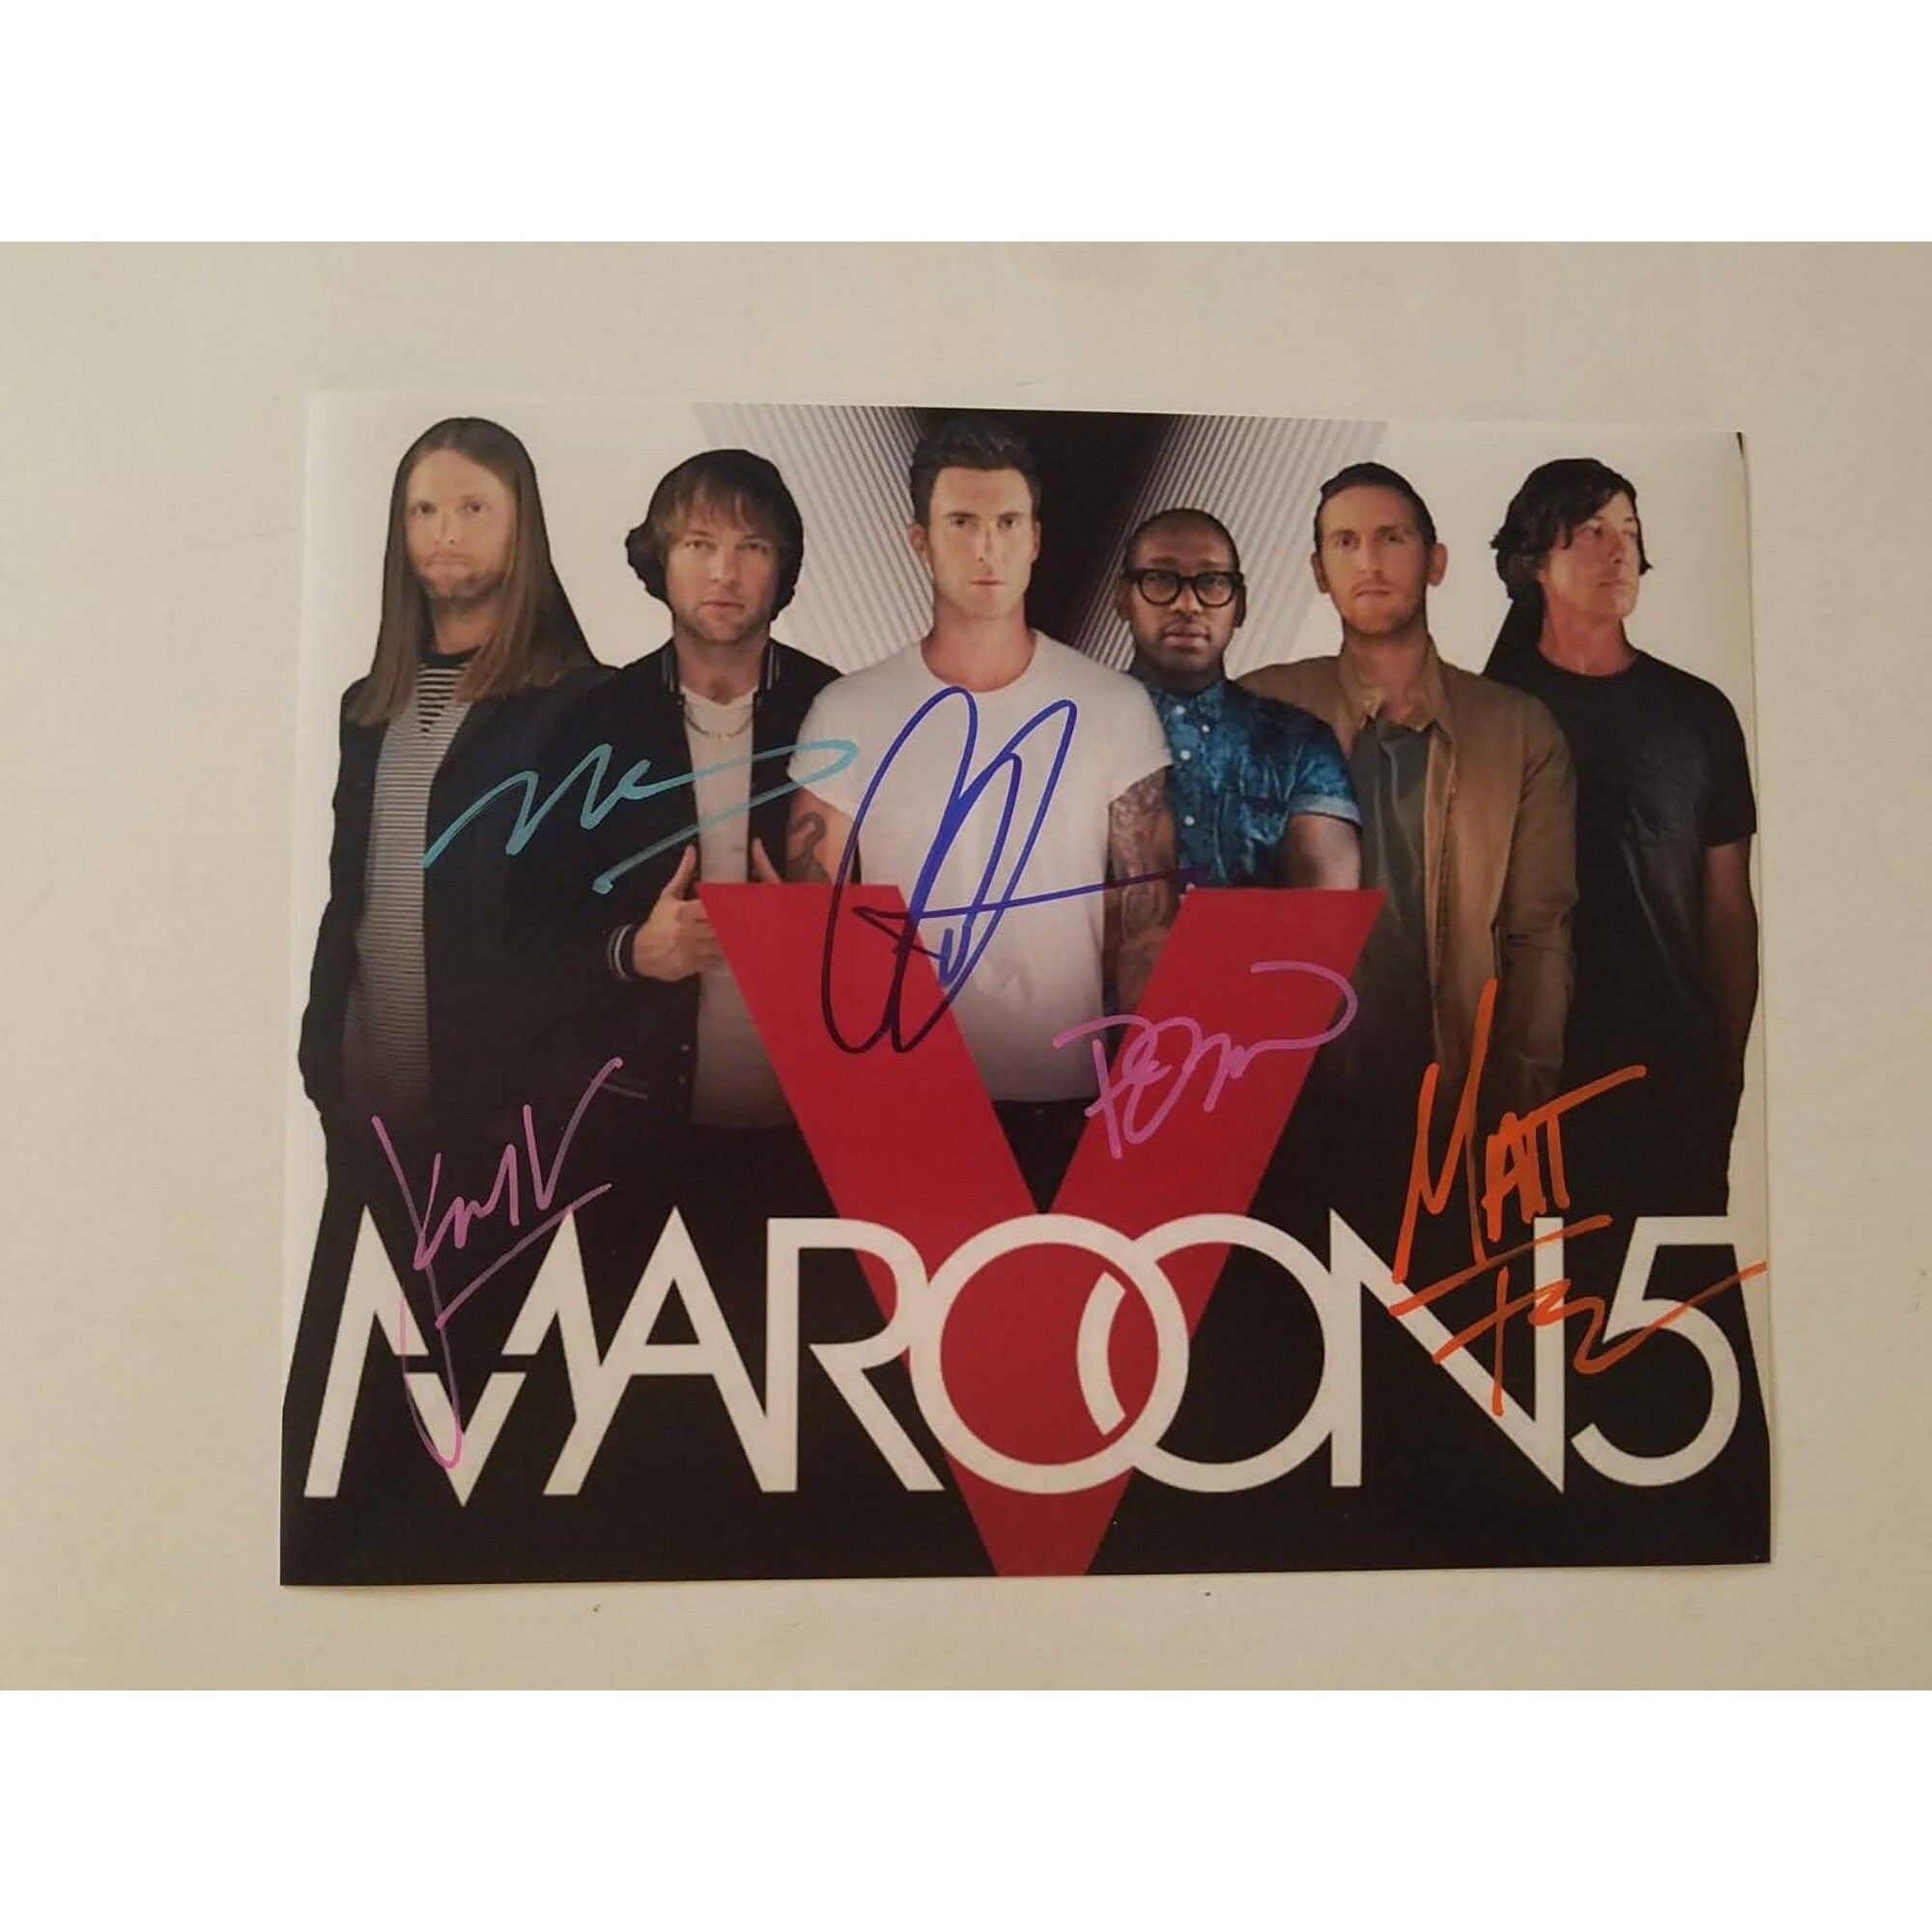 Maroon 5 8 x 10 signed photo